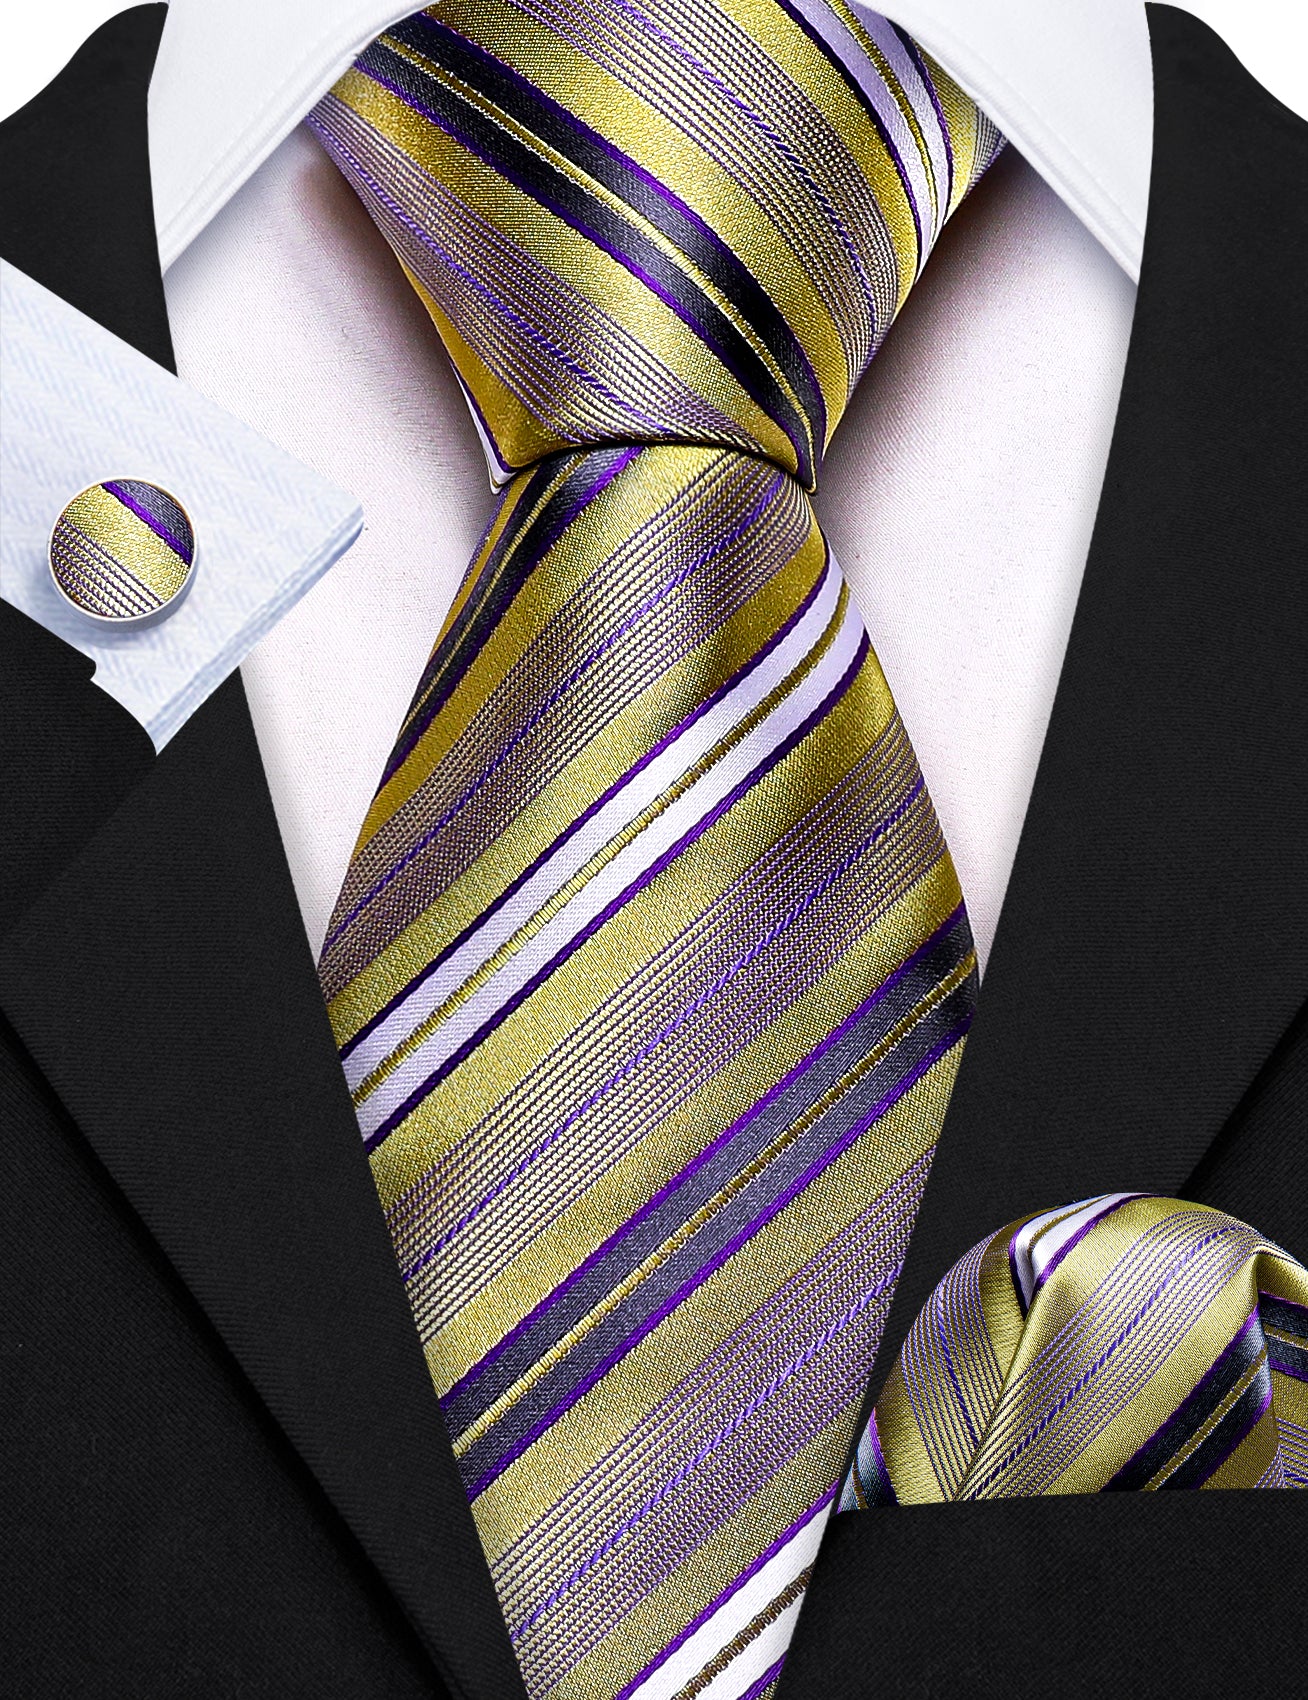 Barry.wang Men's Tie Dark Purple White Gold Striped Silk Tie Handy Cufflinks Set